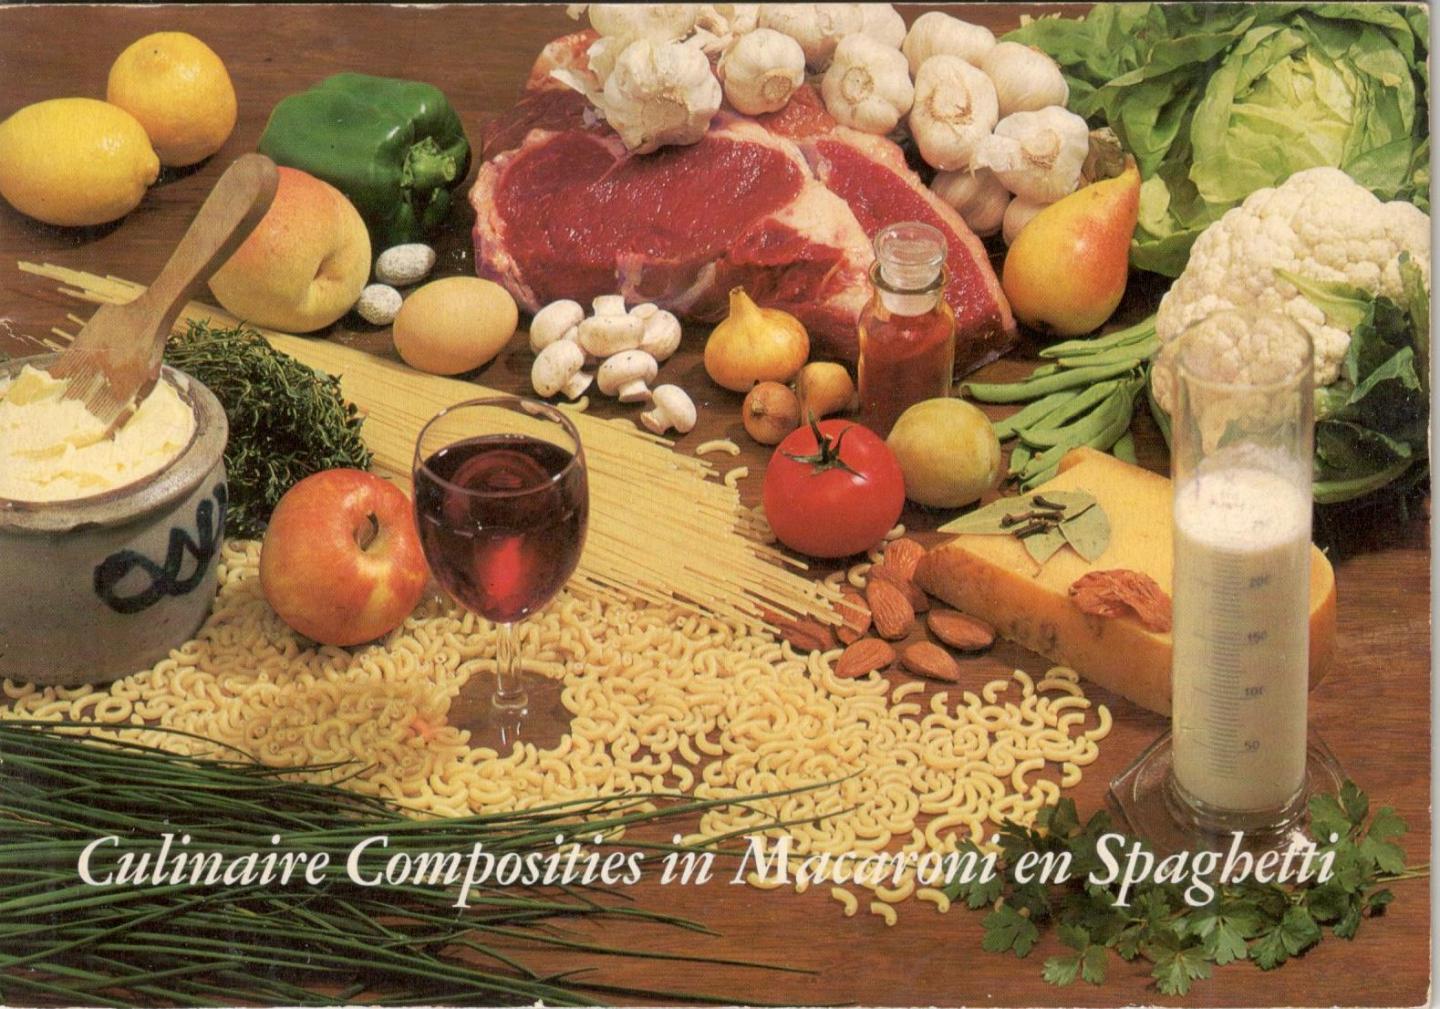 red. - Culinaire composities in macaroni en spaghetti.